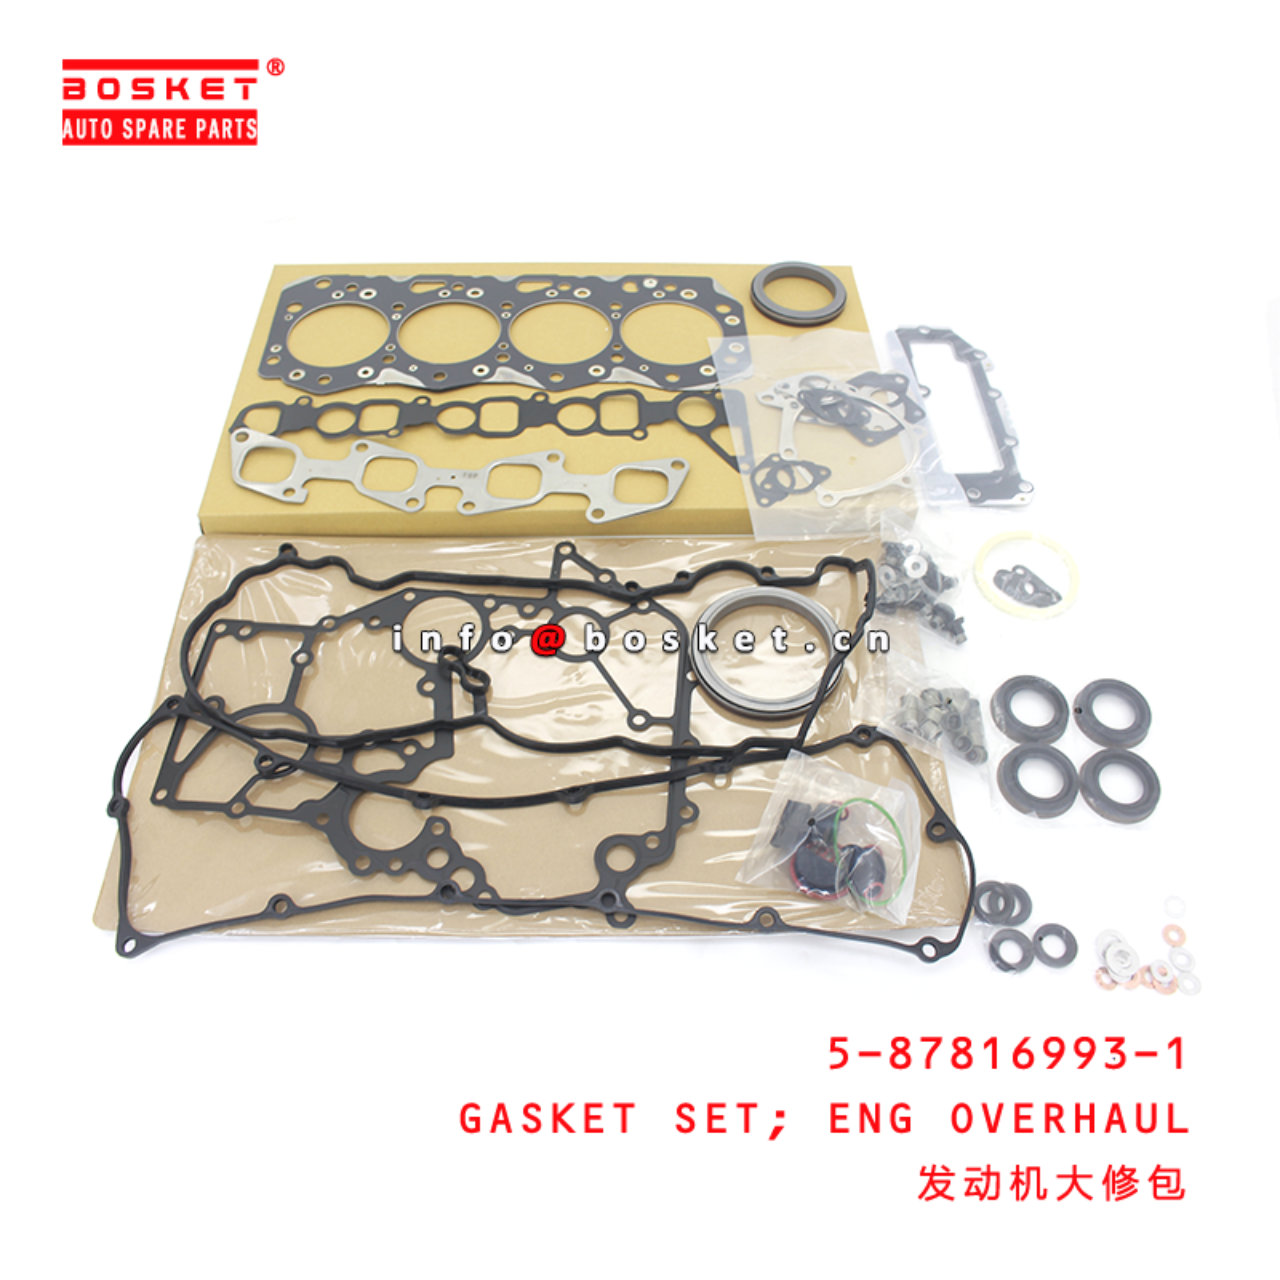 5-87816993-1 Engine Overhaul Gasket Set Suitable for ISUZU  4JJ1 5878169931